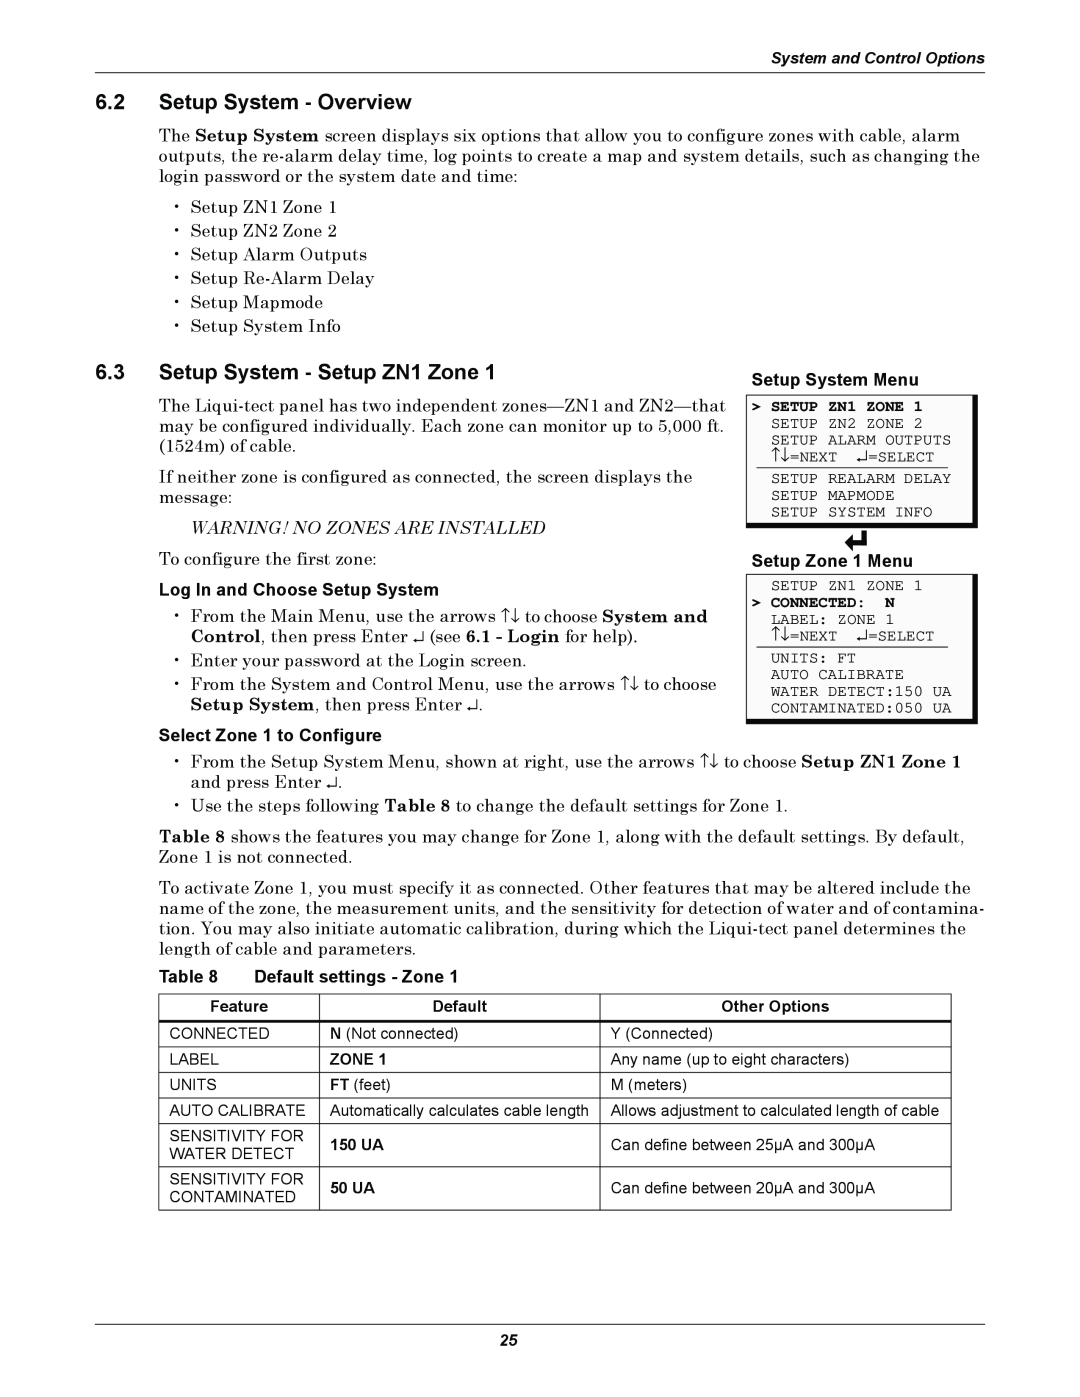 Emerson MC68HC16Z1 6.2Setup System - Overview, 6.3Setup System - Setup ZN1 Zone, Warning! No Zones Are Installed 